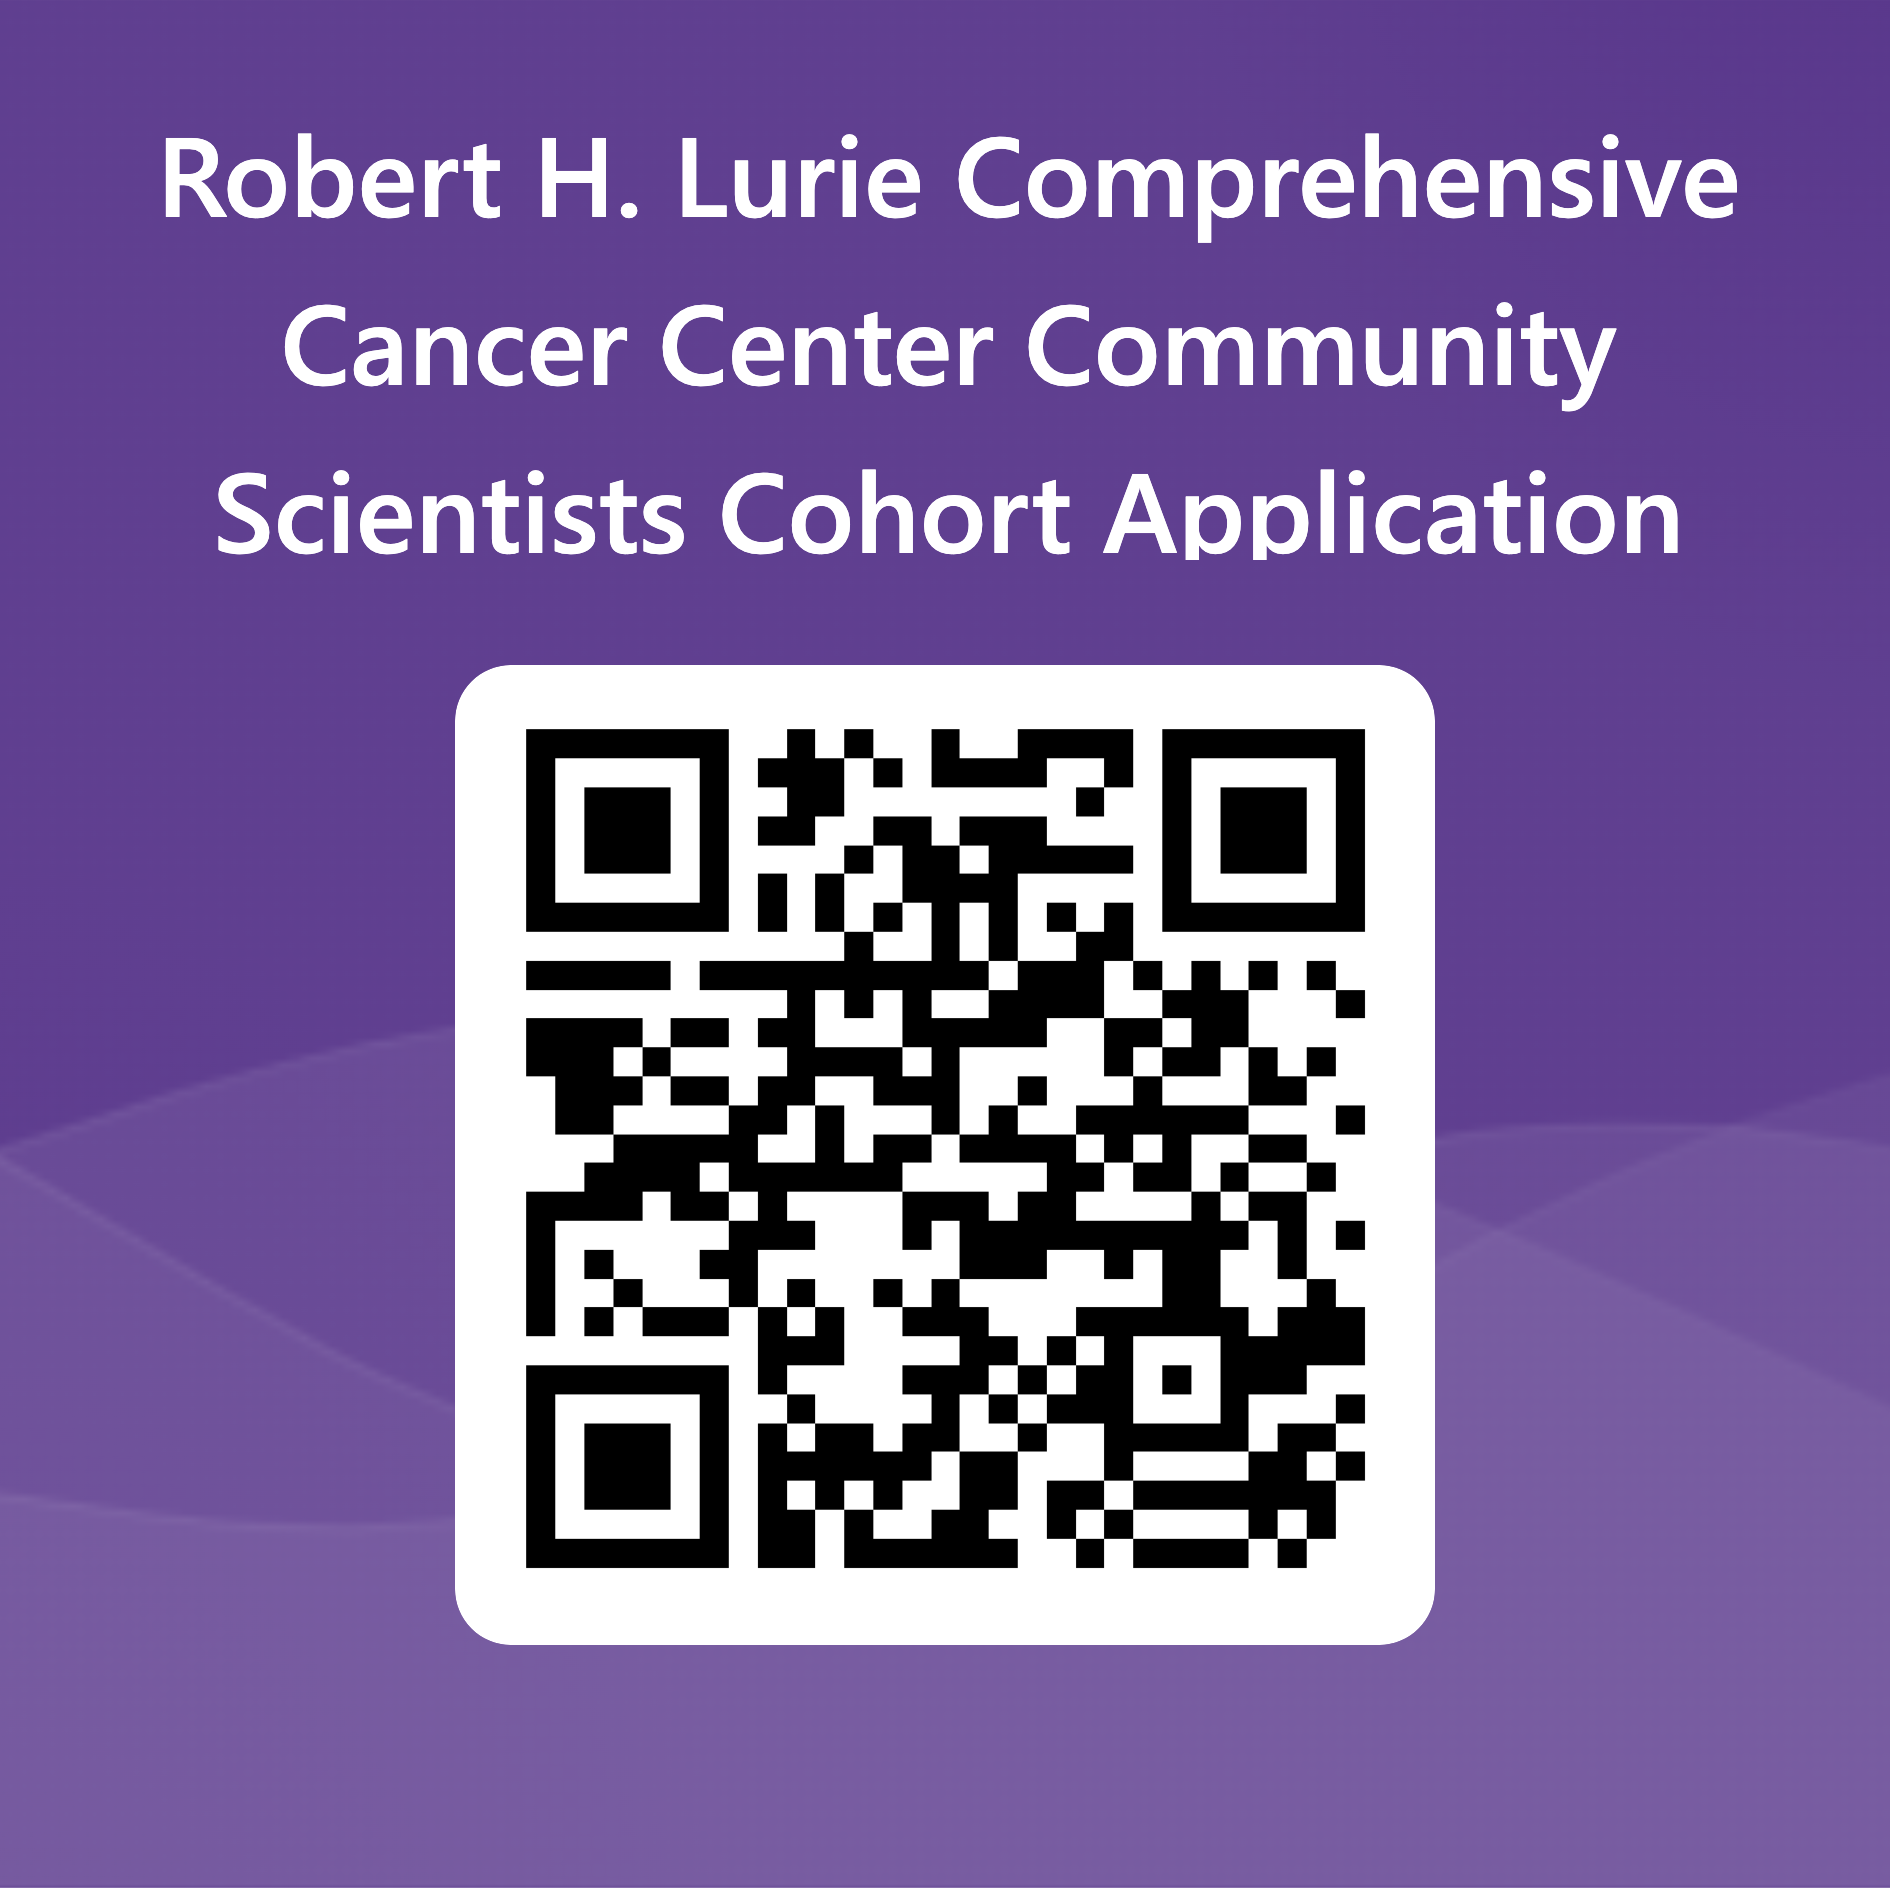 qrcode-for-robert-h-lurie-comprehensive-cancer-center-community-scientists-cohort-application.png